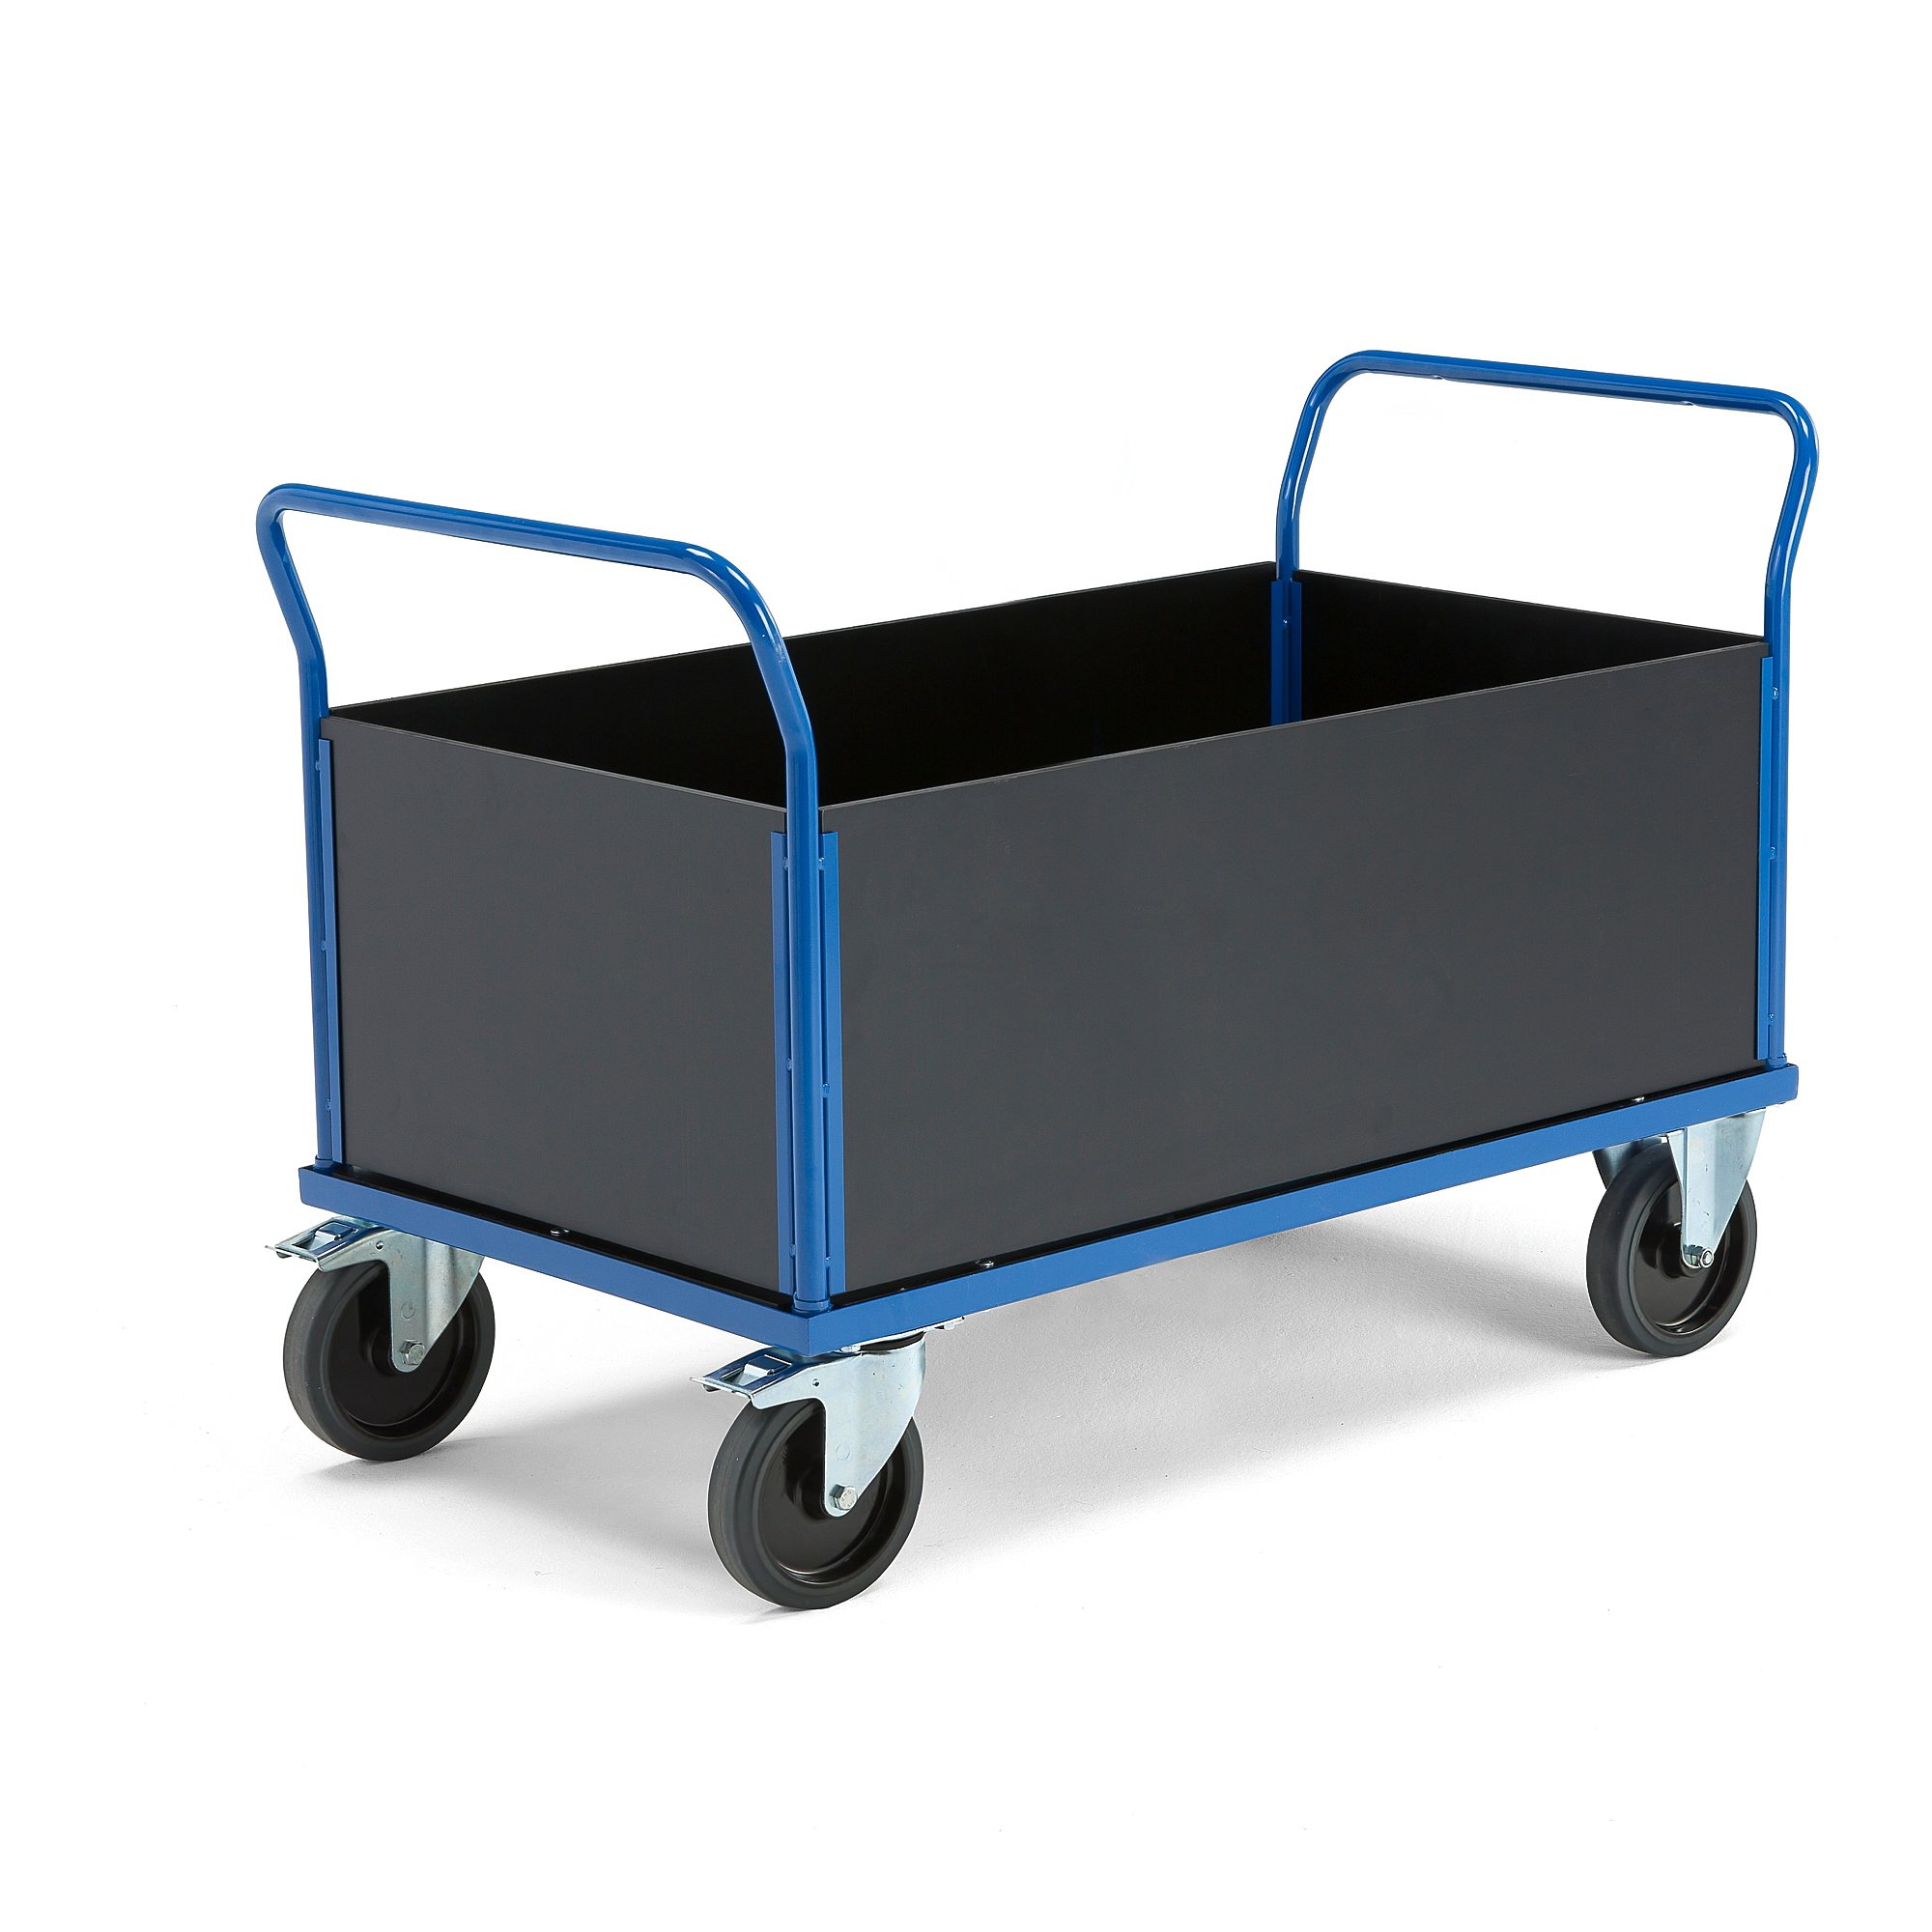 Plošinový vozík TRANSFER, 4 dřevěné stěny, 1200x800 mm, 1000 kg, elastická gumová kola, s brzdami